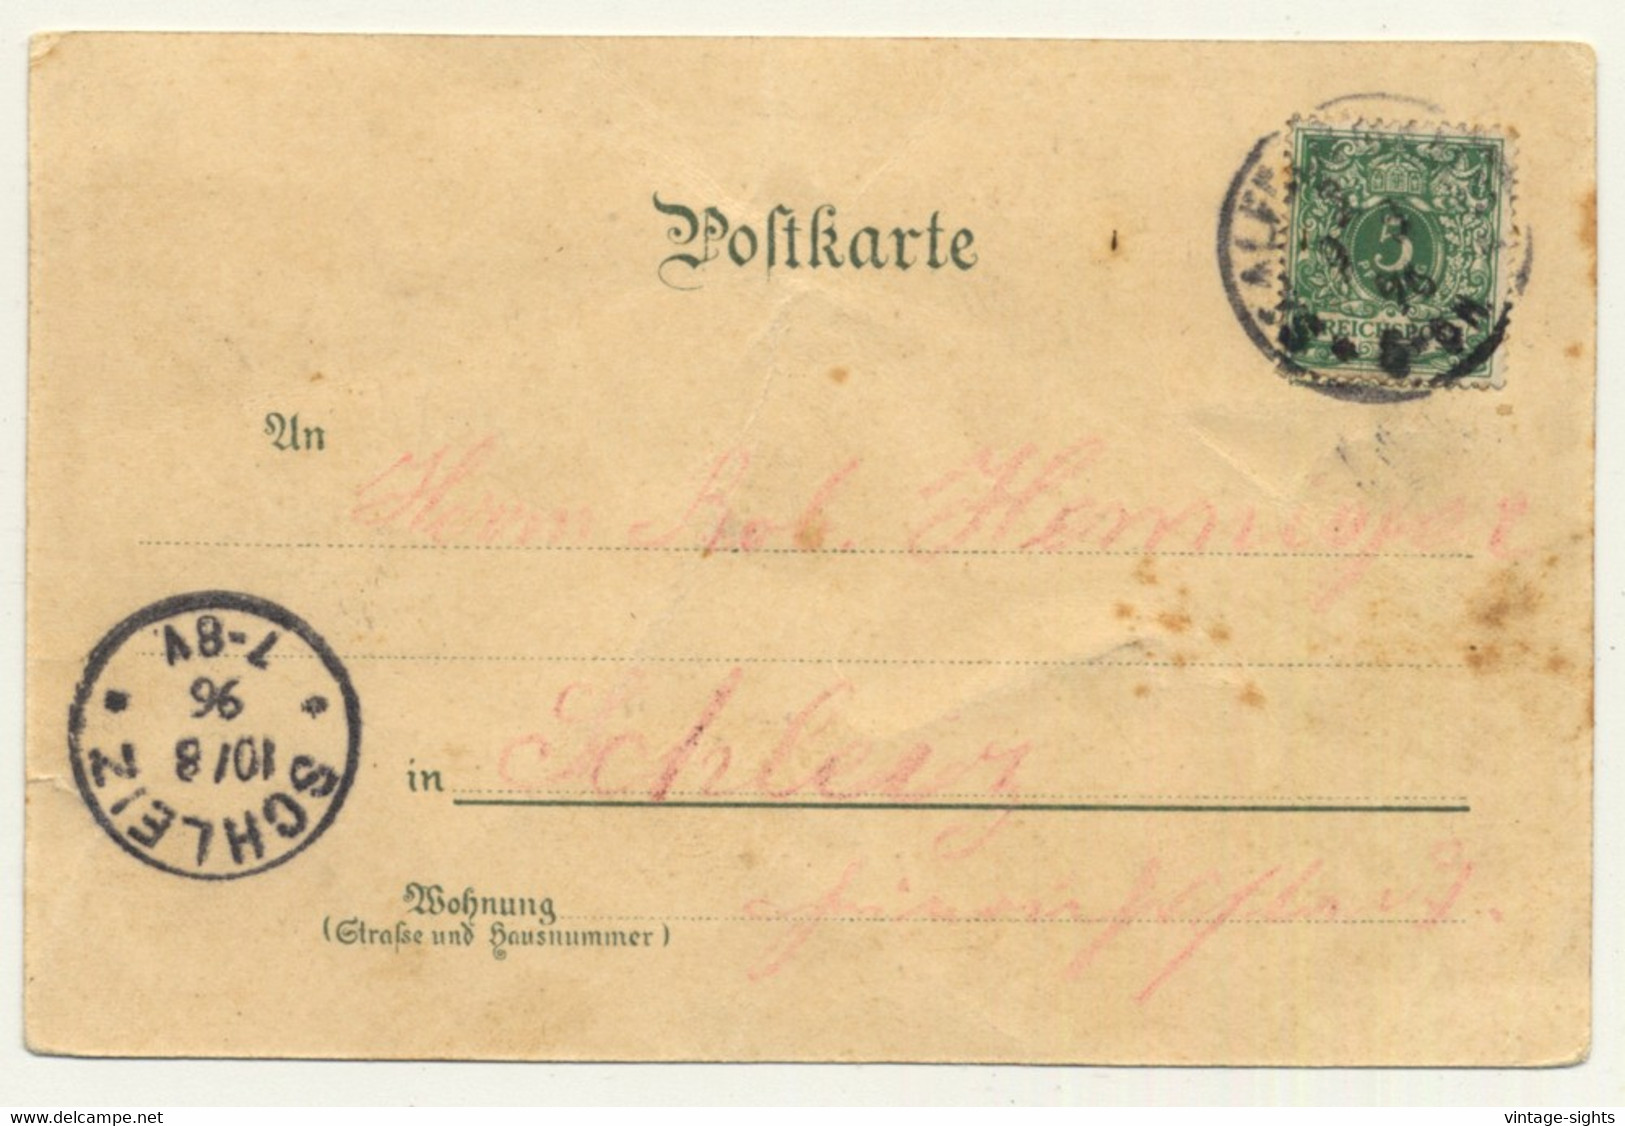 Gruss Vom Schützenfest - Rifle Festival / Burger Bräu (Vintage Postcard Litho 1898) - Tir (Armes)